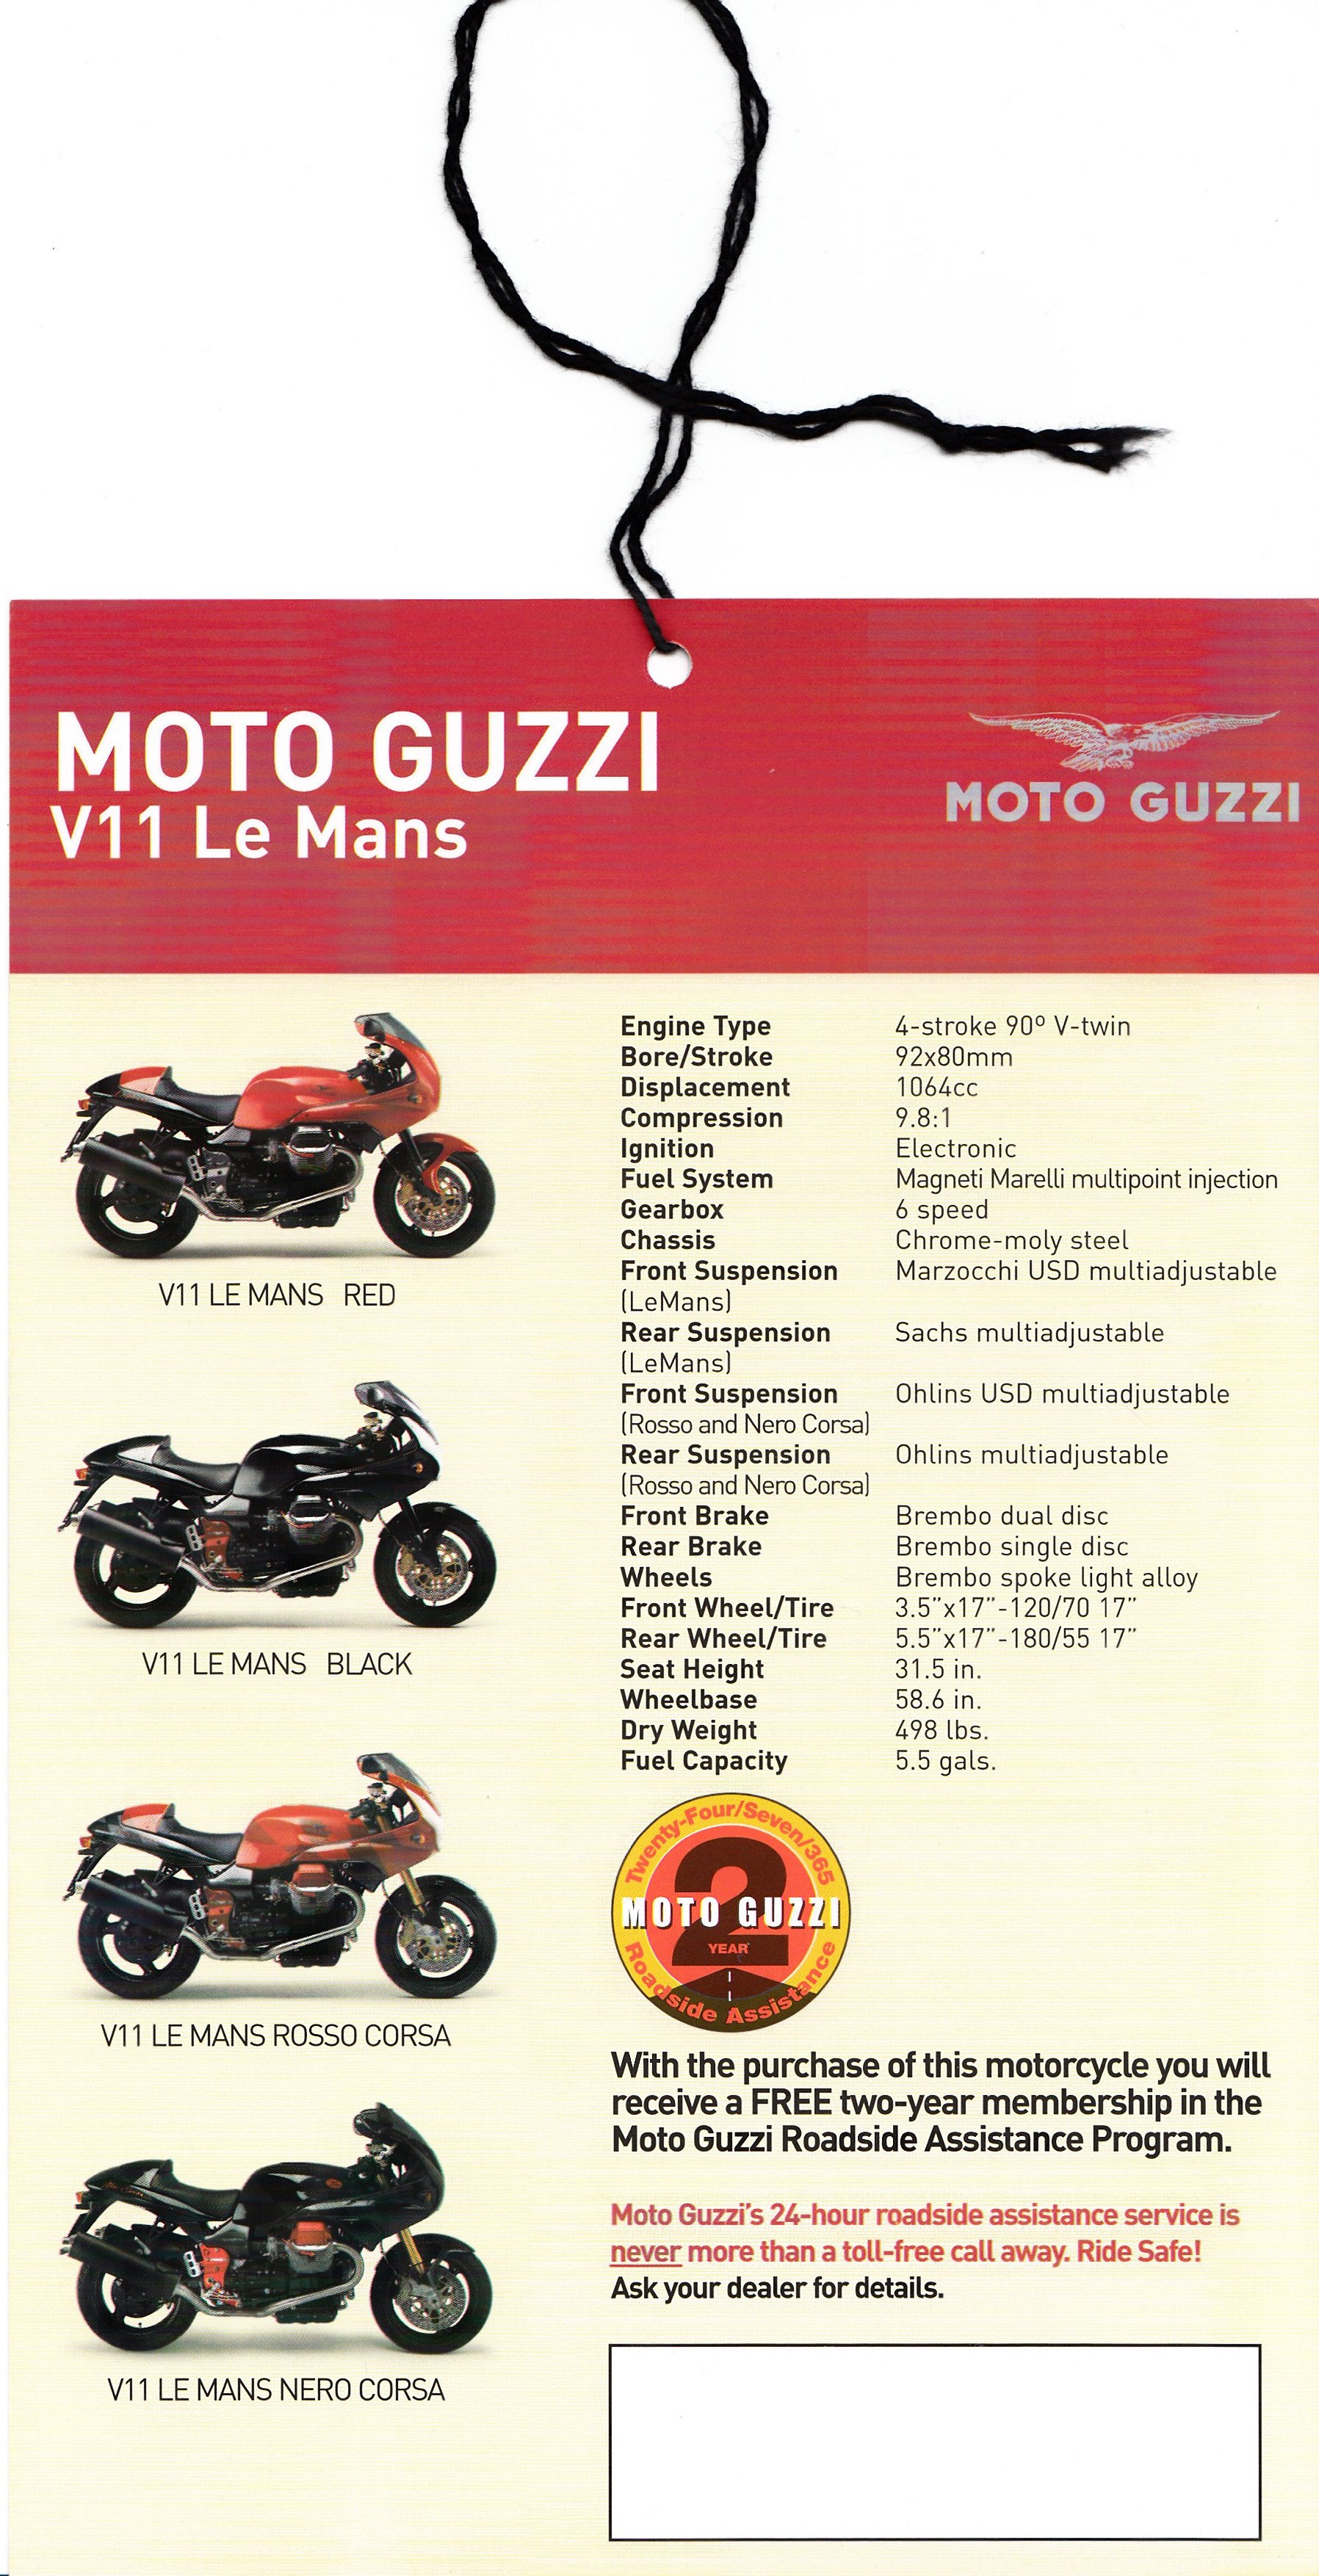 Tag - Moto Guzzi V11 Le Mans